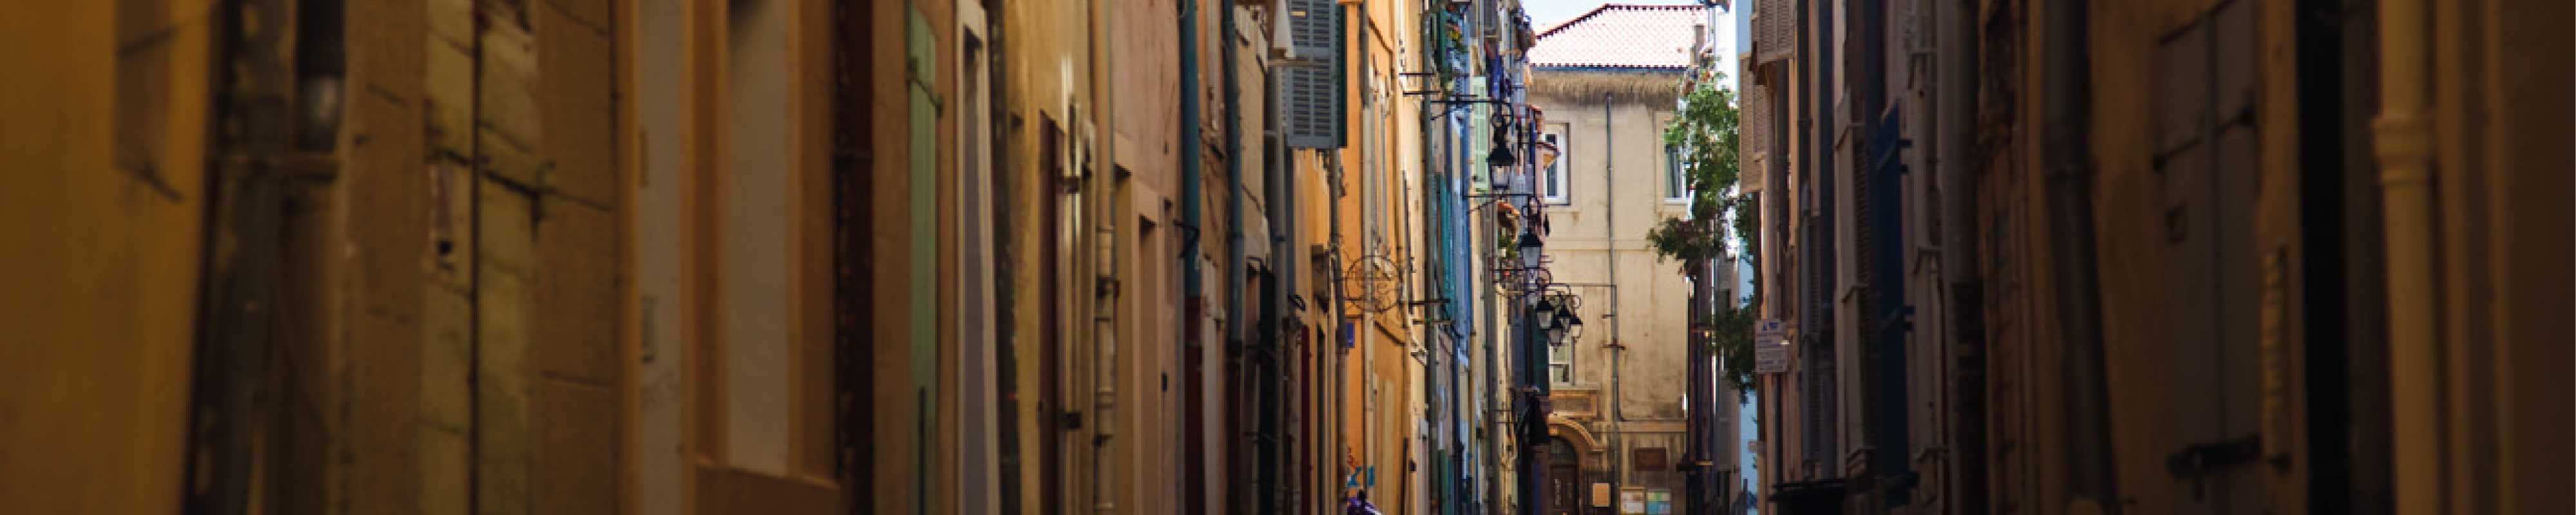 Luggage Storage | Le Panier in Marseille - Nannybag